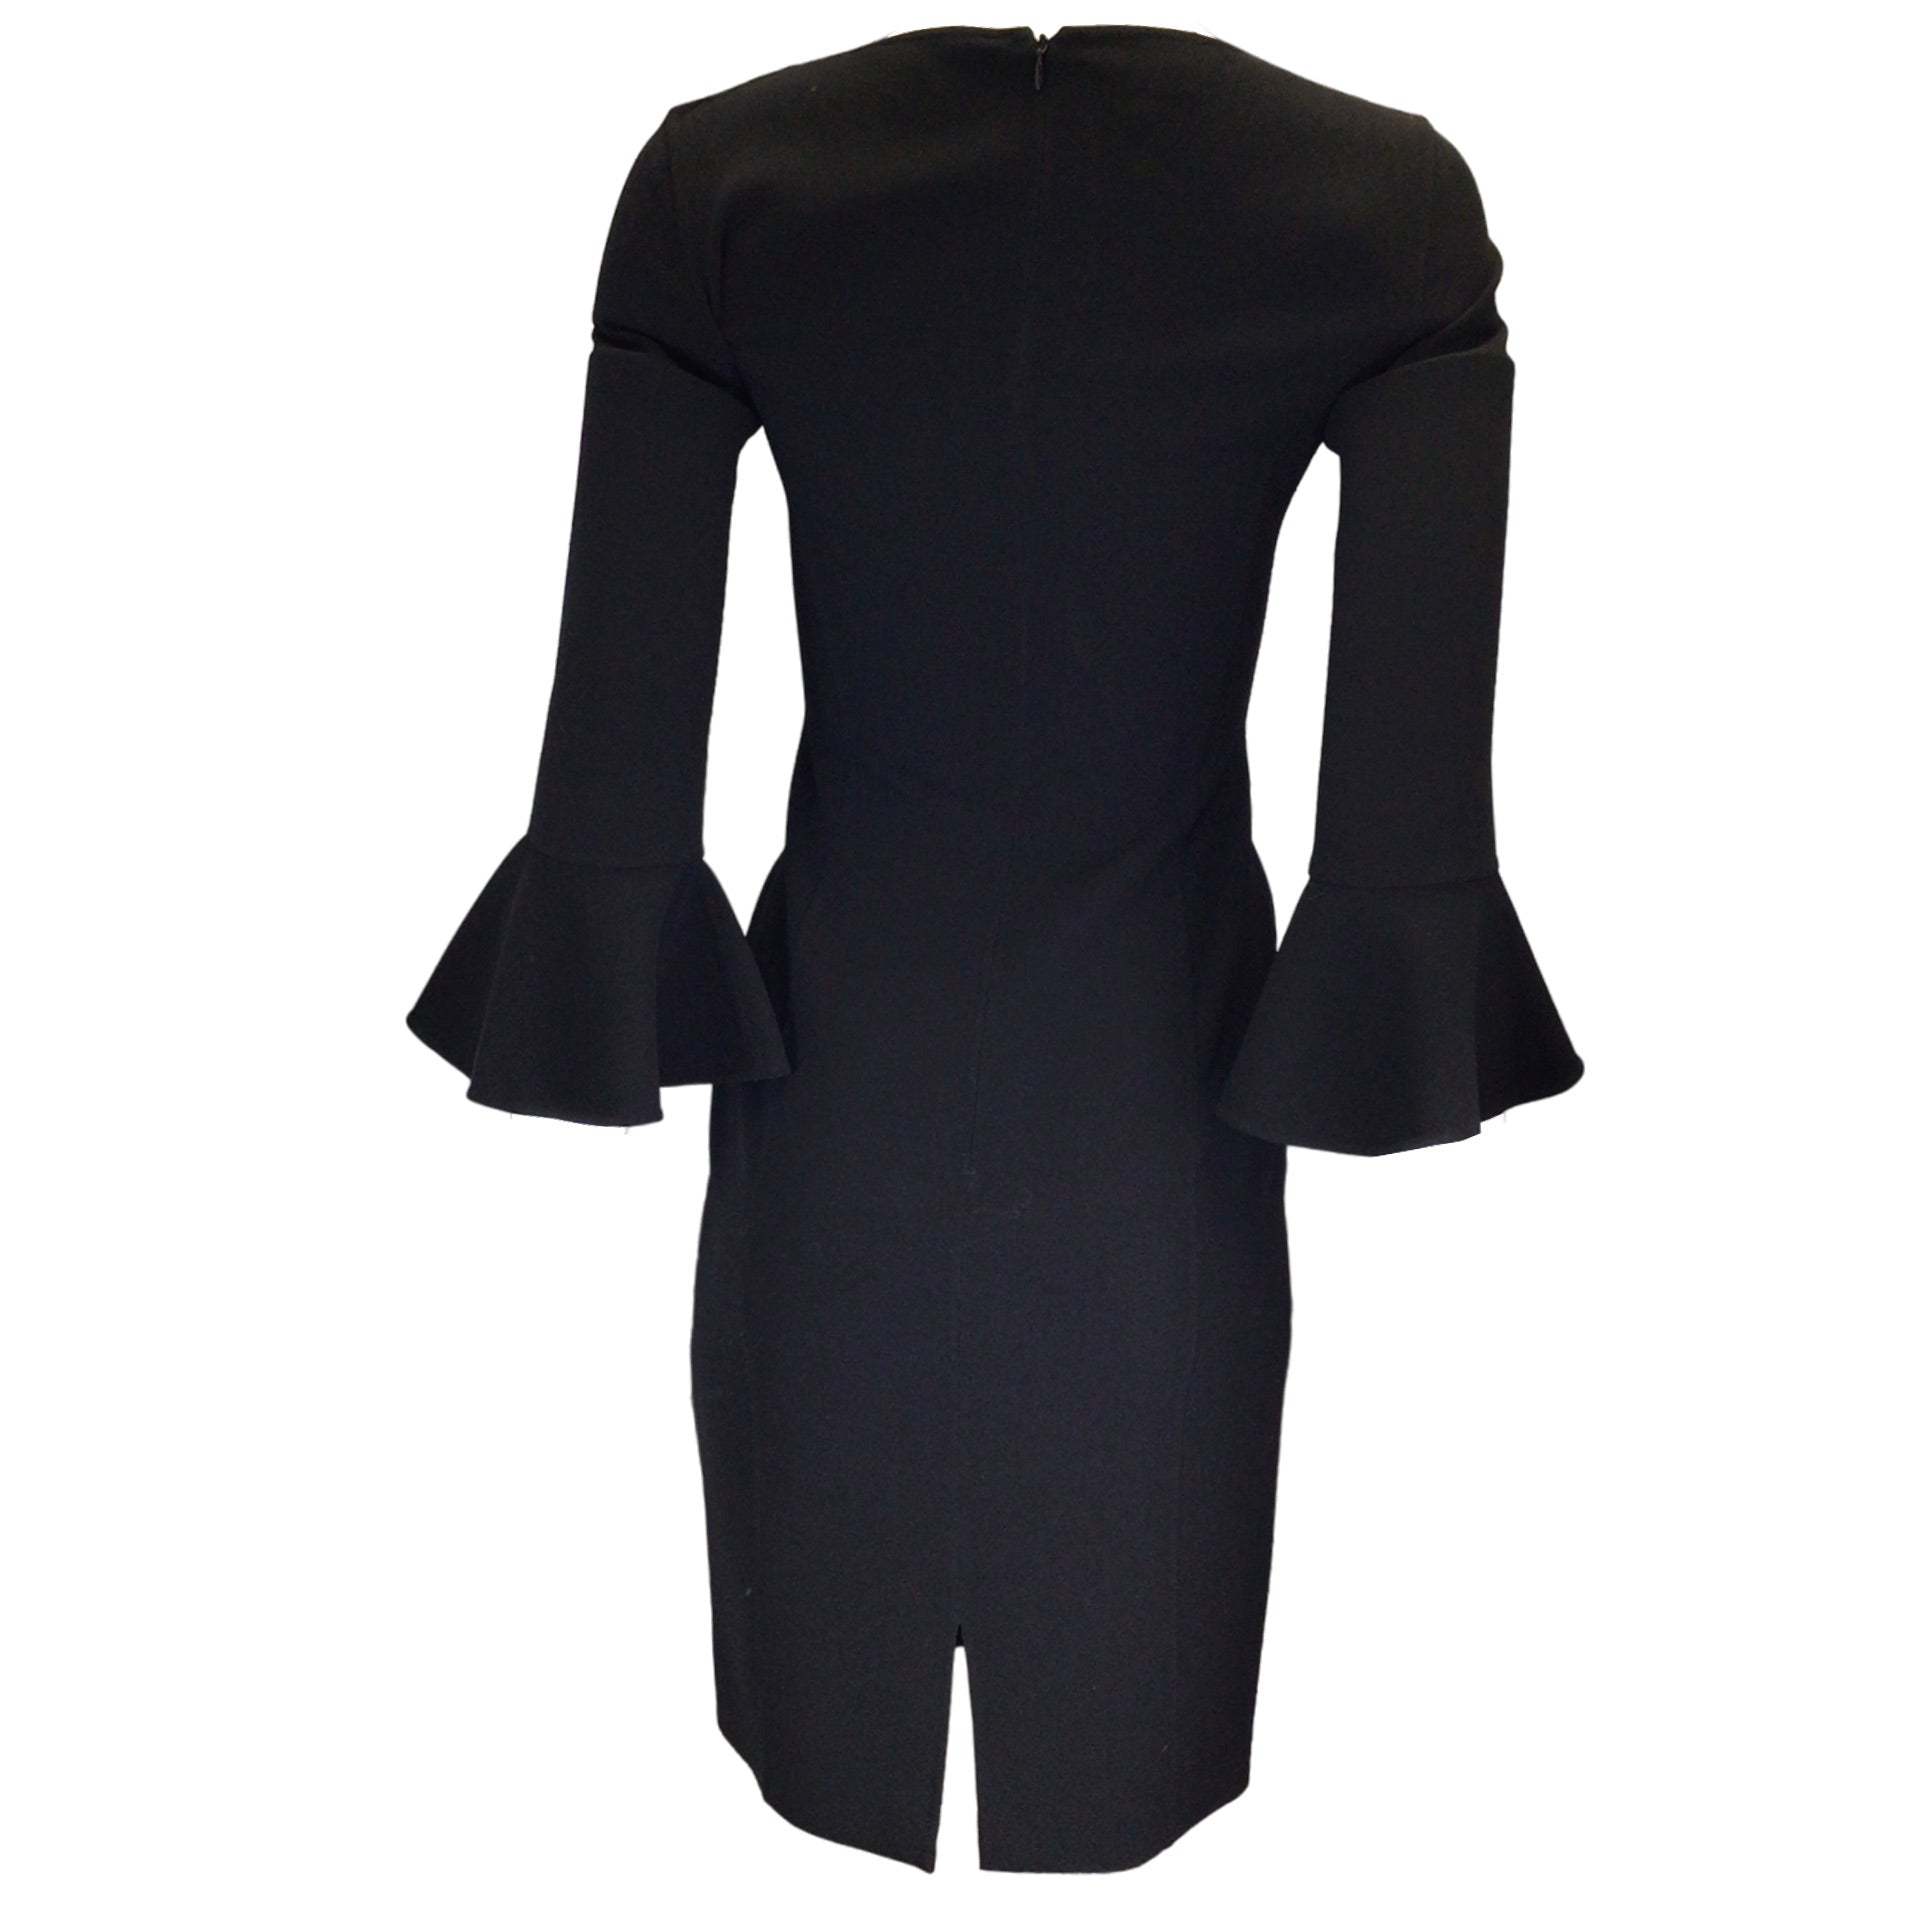 Michael Kors Collection Black Bell Sleeved Wool Crepe Dress